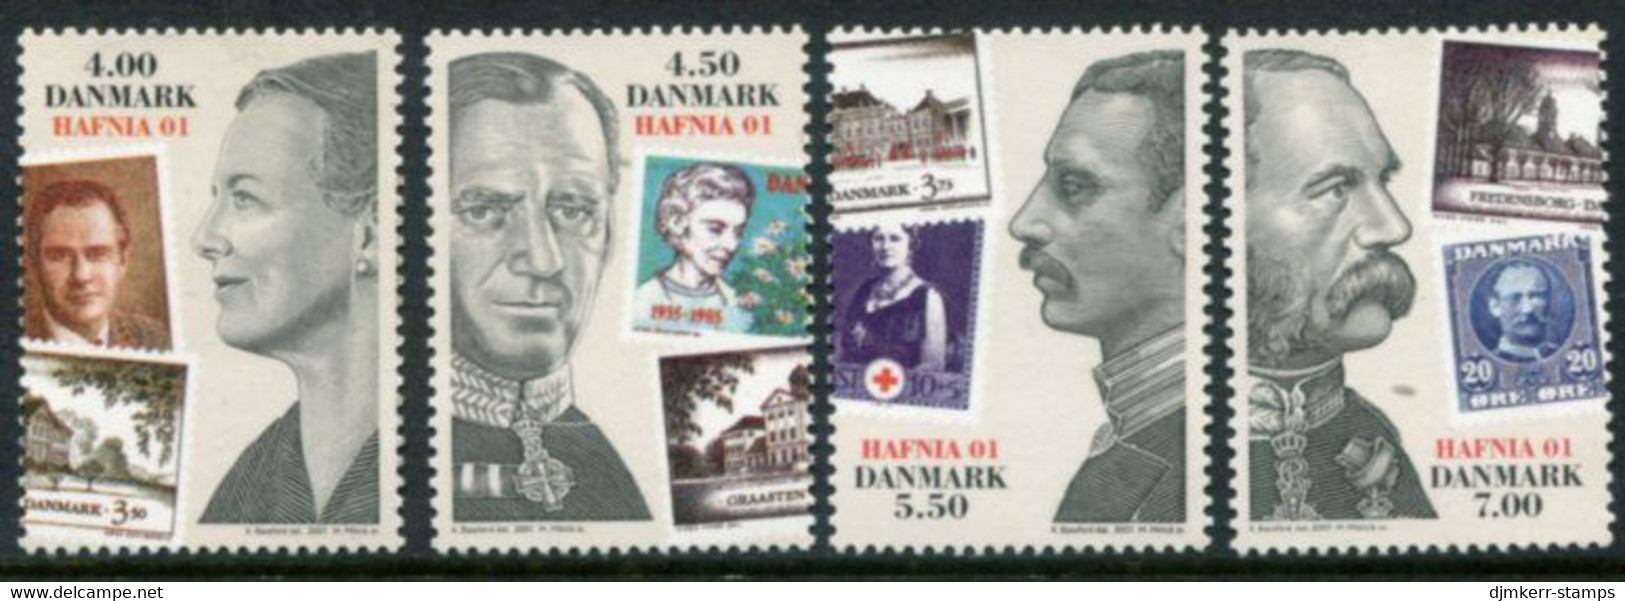 DENMARK 2001 HAFNIA'01 Stamp Exhibition MNH / **.. Michel 1287-90 - Nuevos